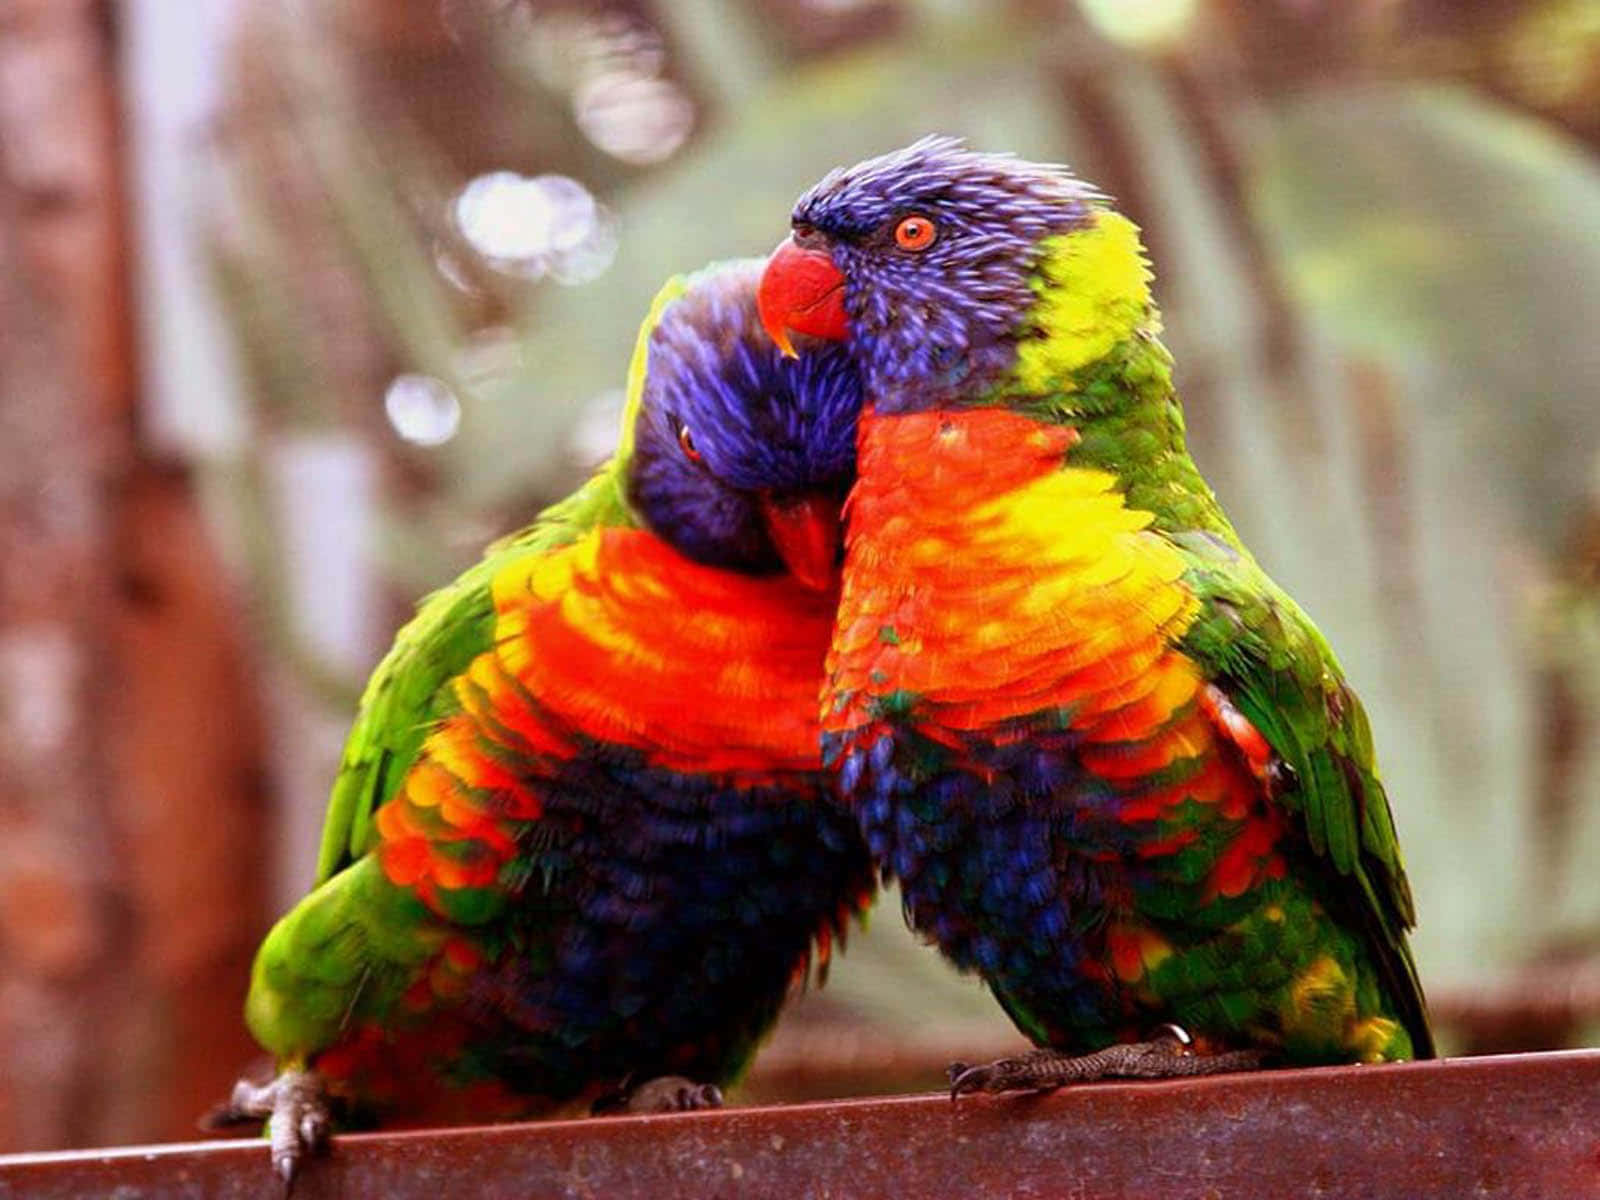 Einfriedlicher Moment Zweier Liebesvögel